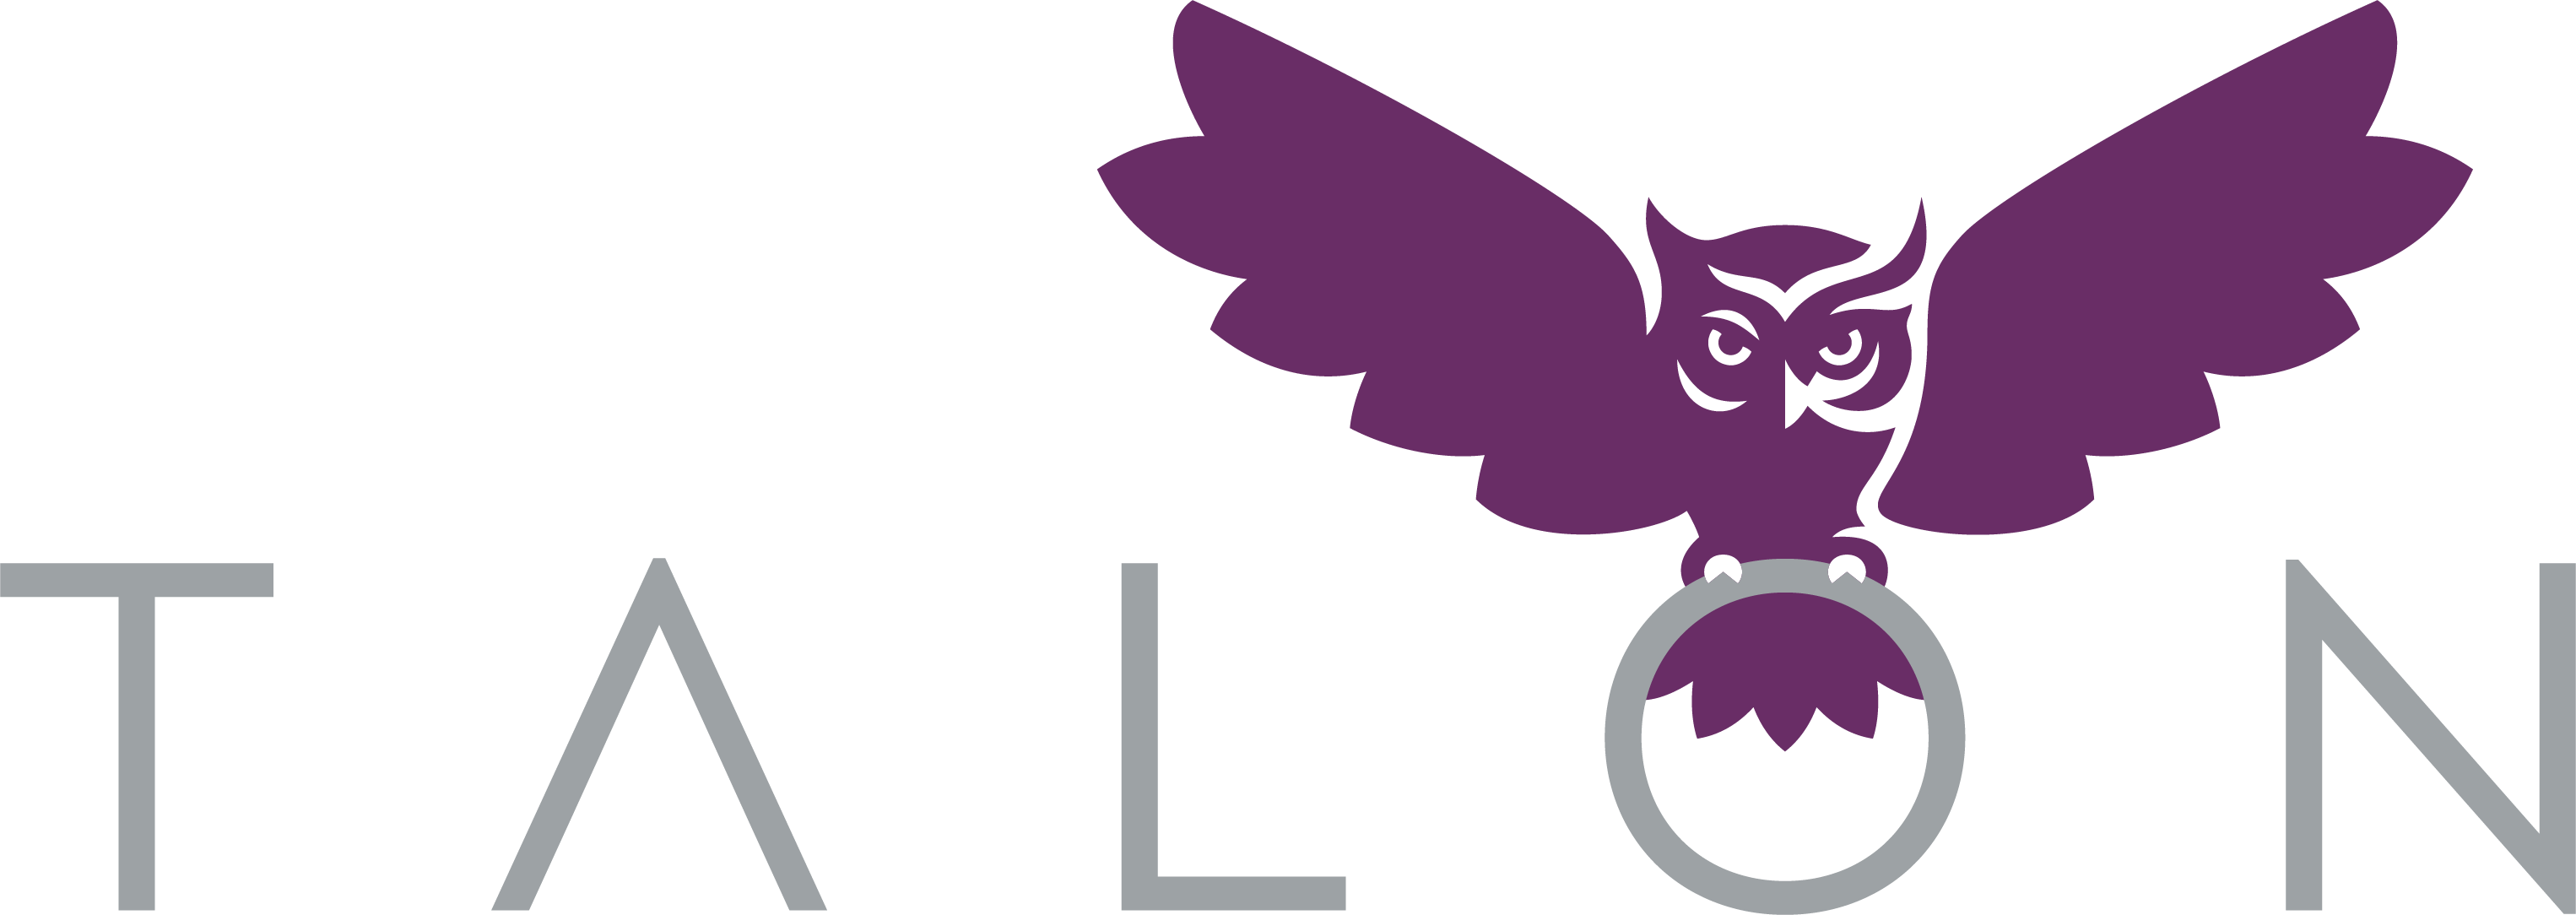 Talon_Primary-Logo-RGB